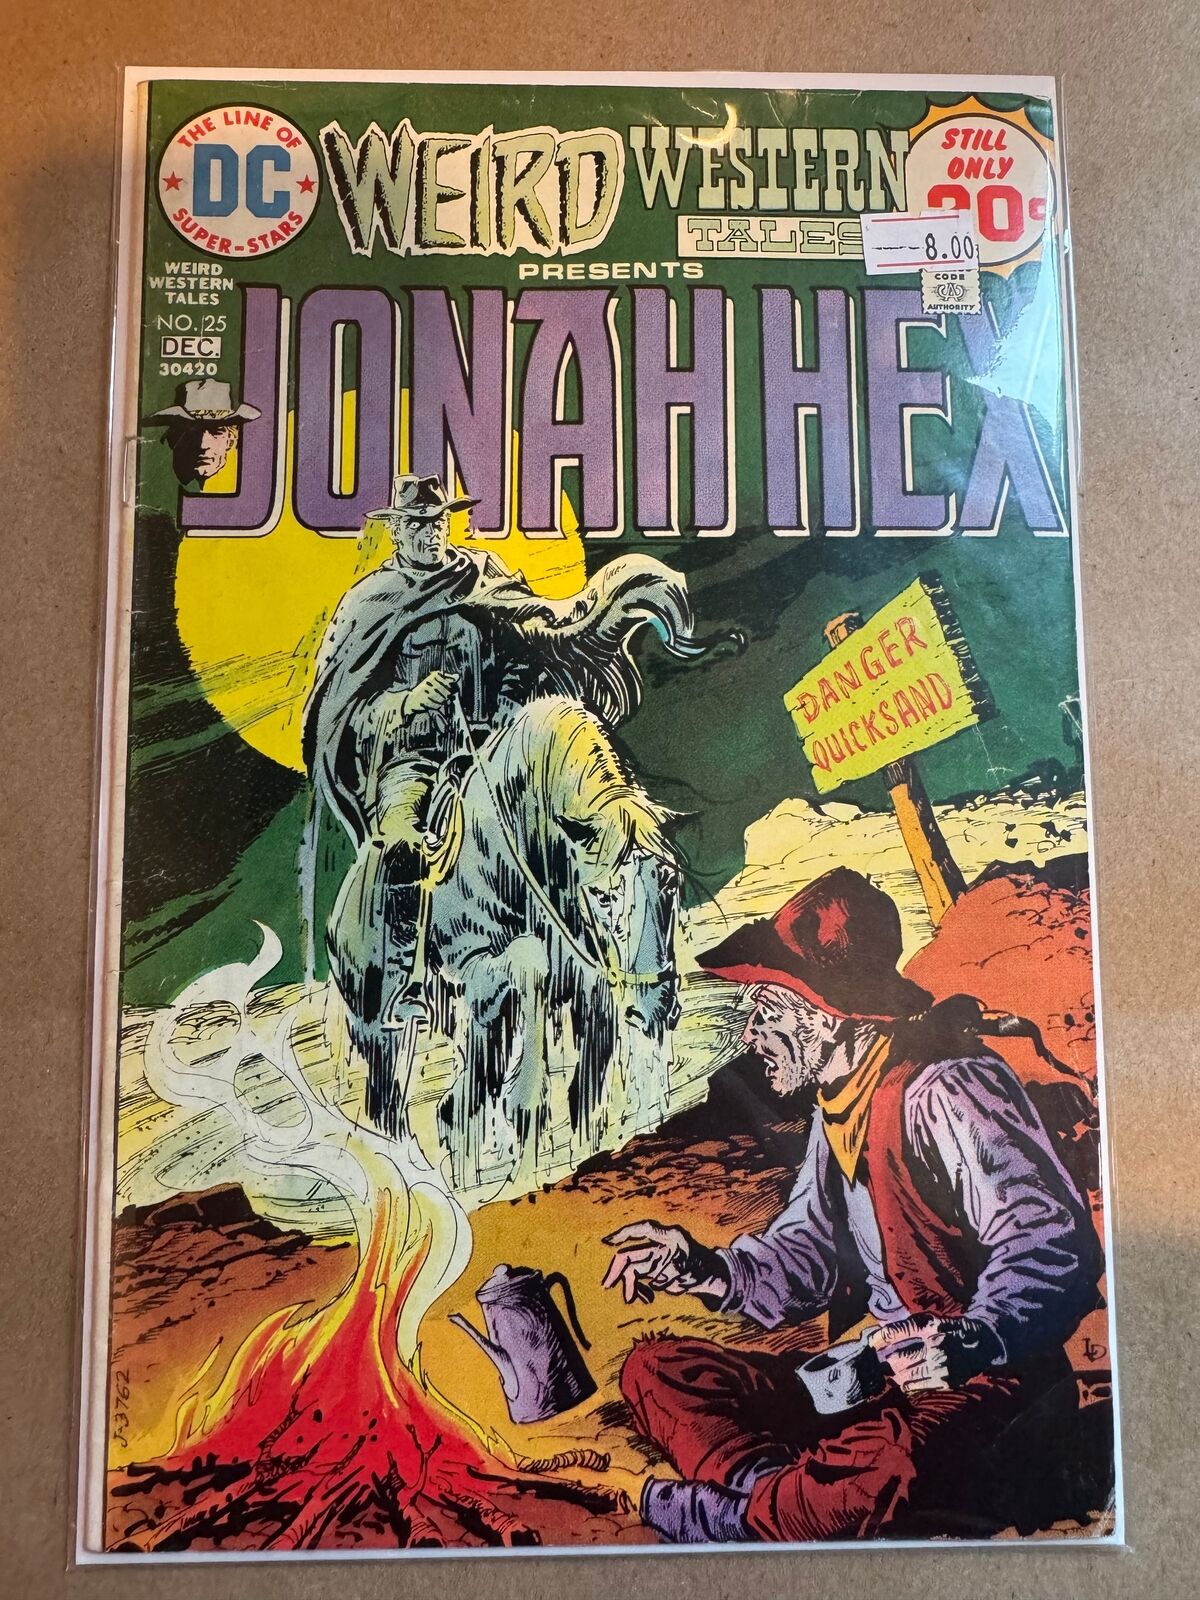 Weird Western Tales (Issue 25)